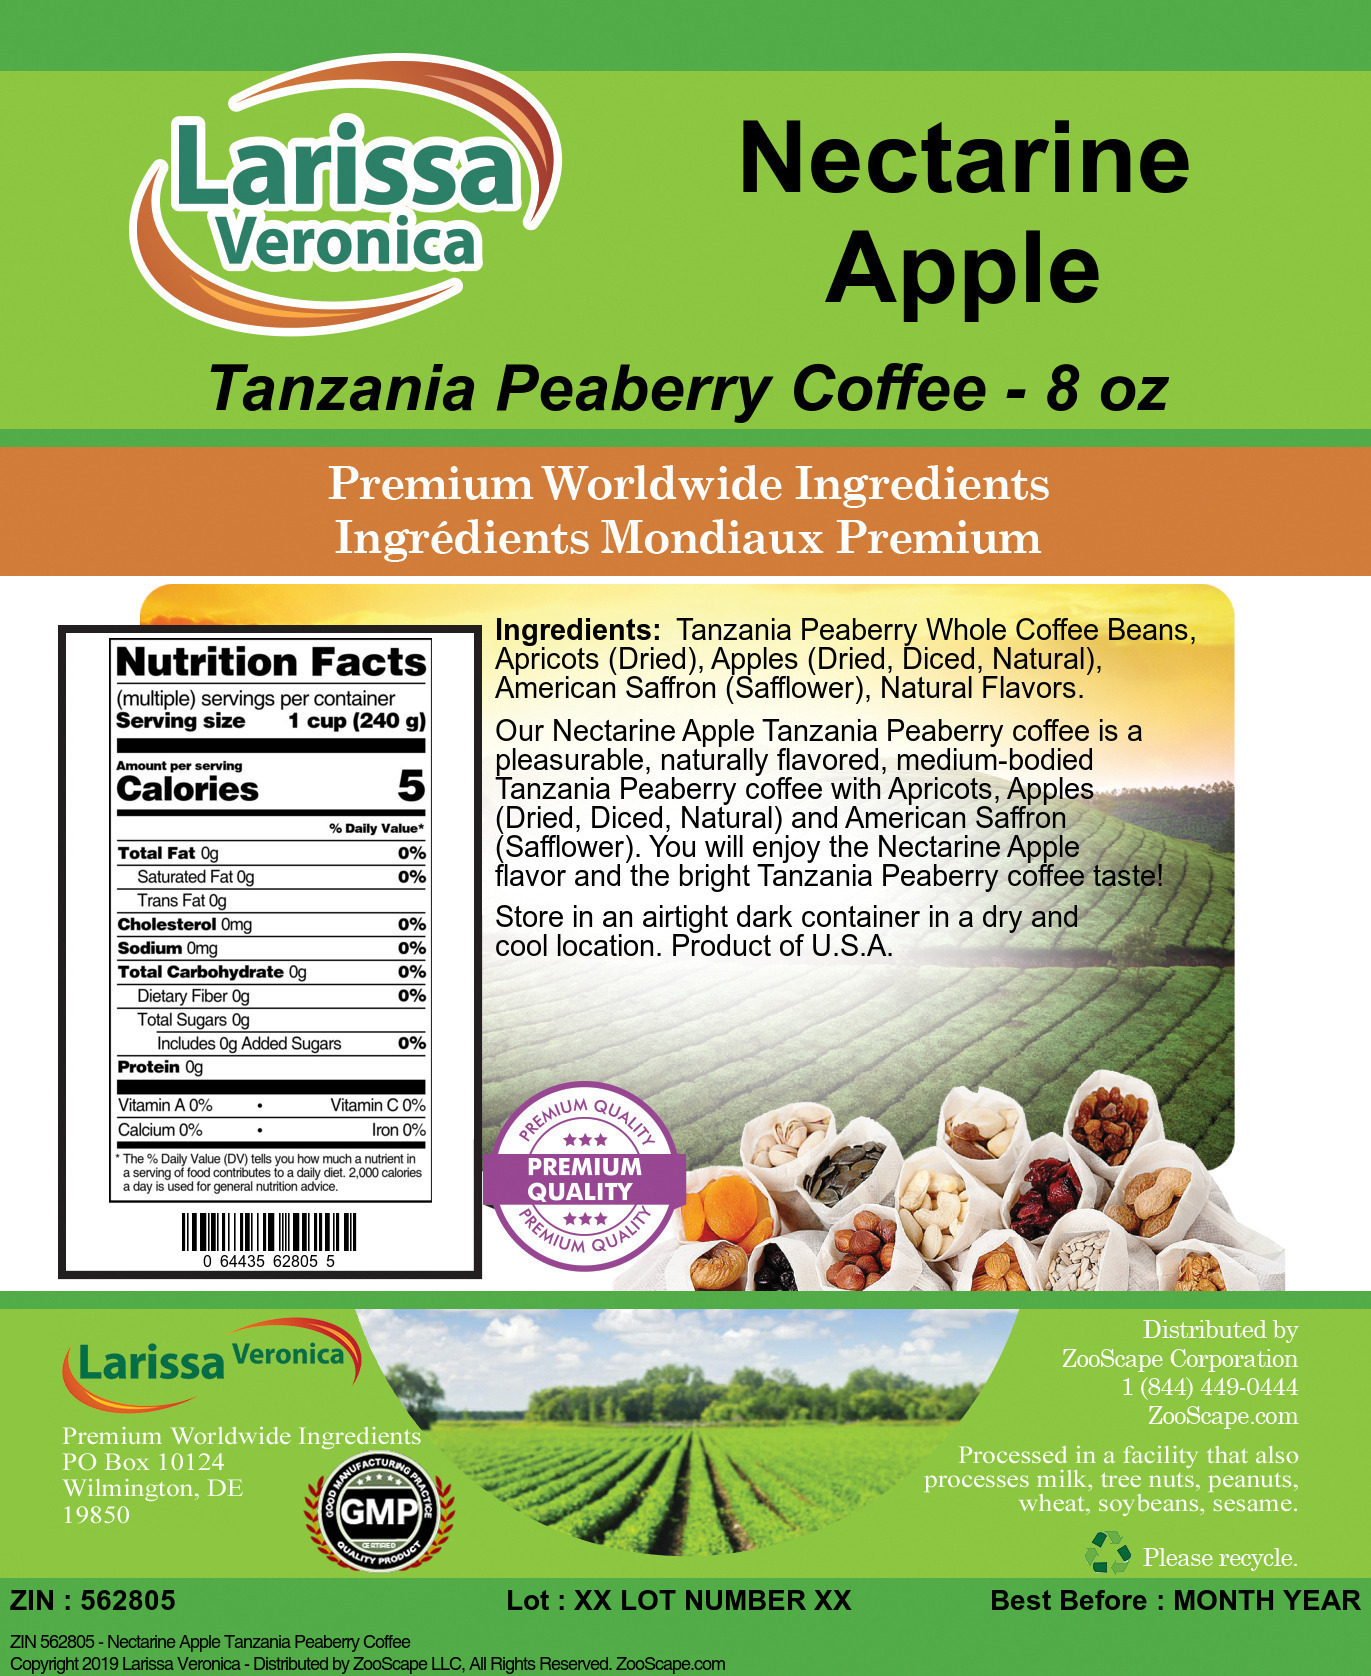 Nectarine Apple Tanzania Peaberry Coffee - Label